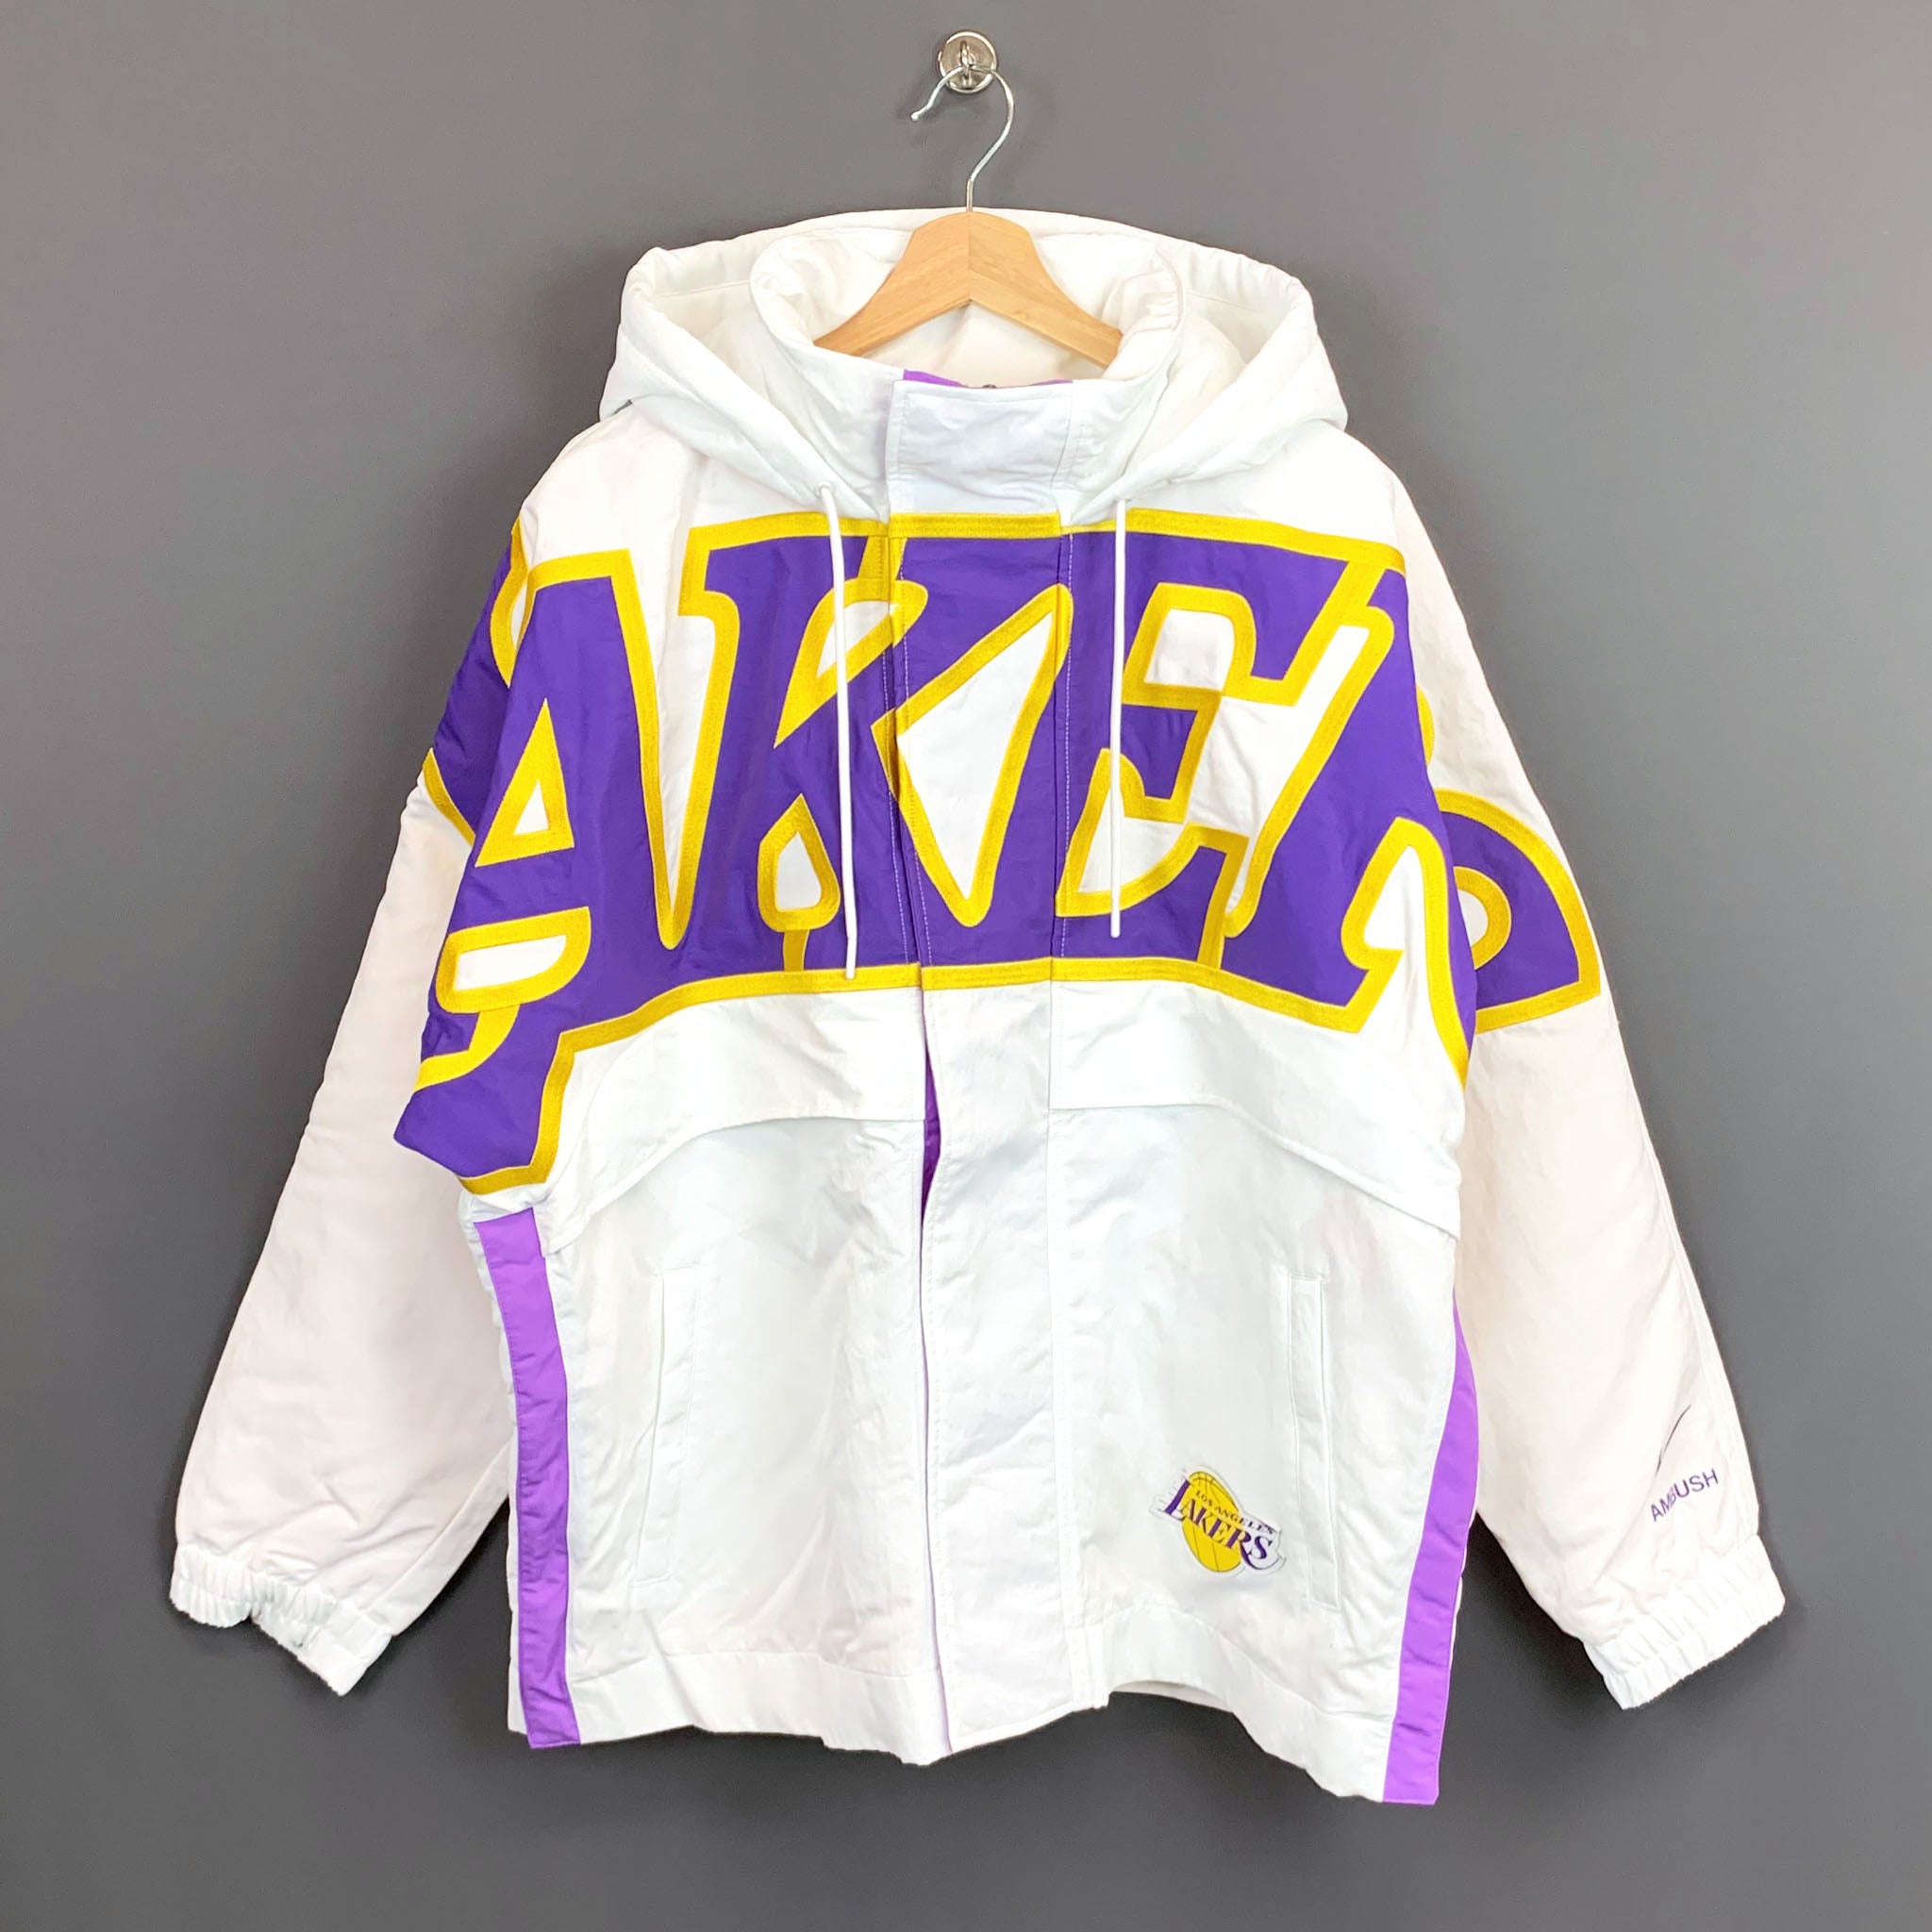 nike x ambush nba collection lakers jacket Hot Sale - OFF 56%